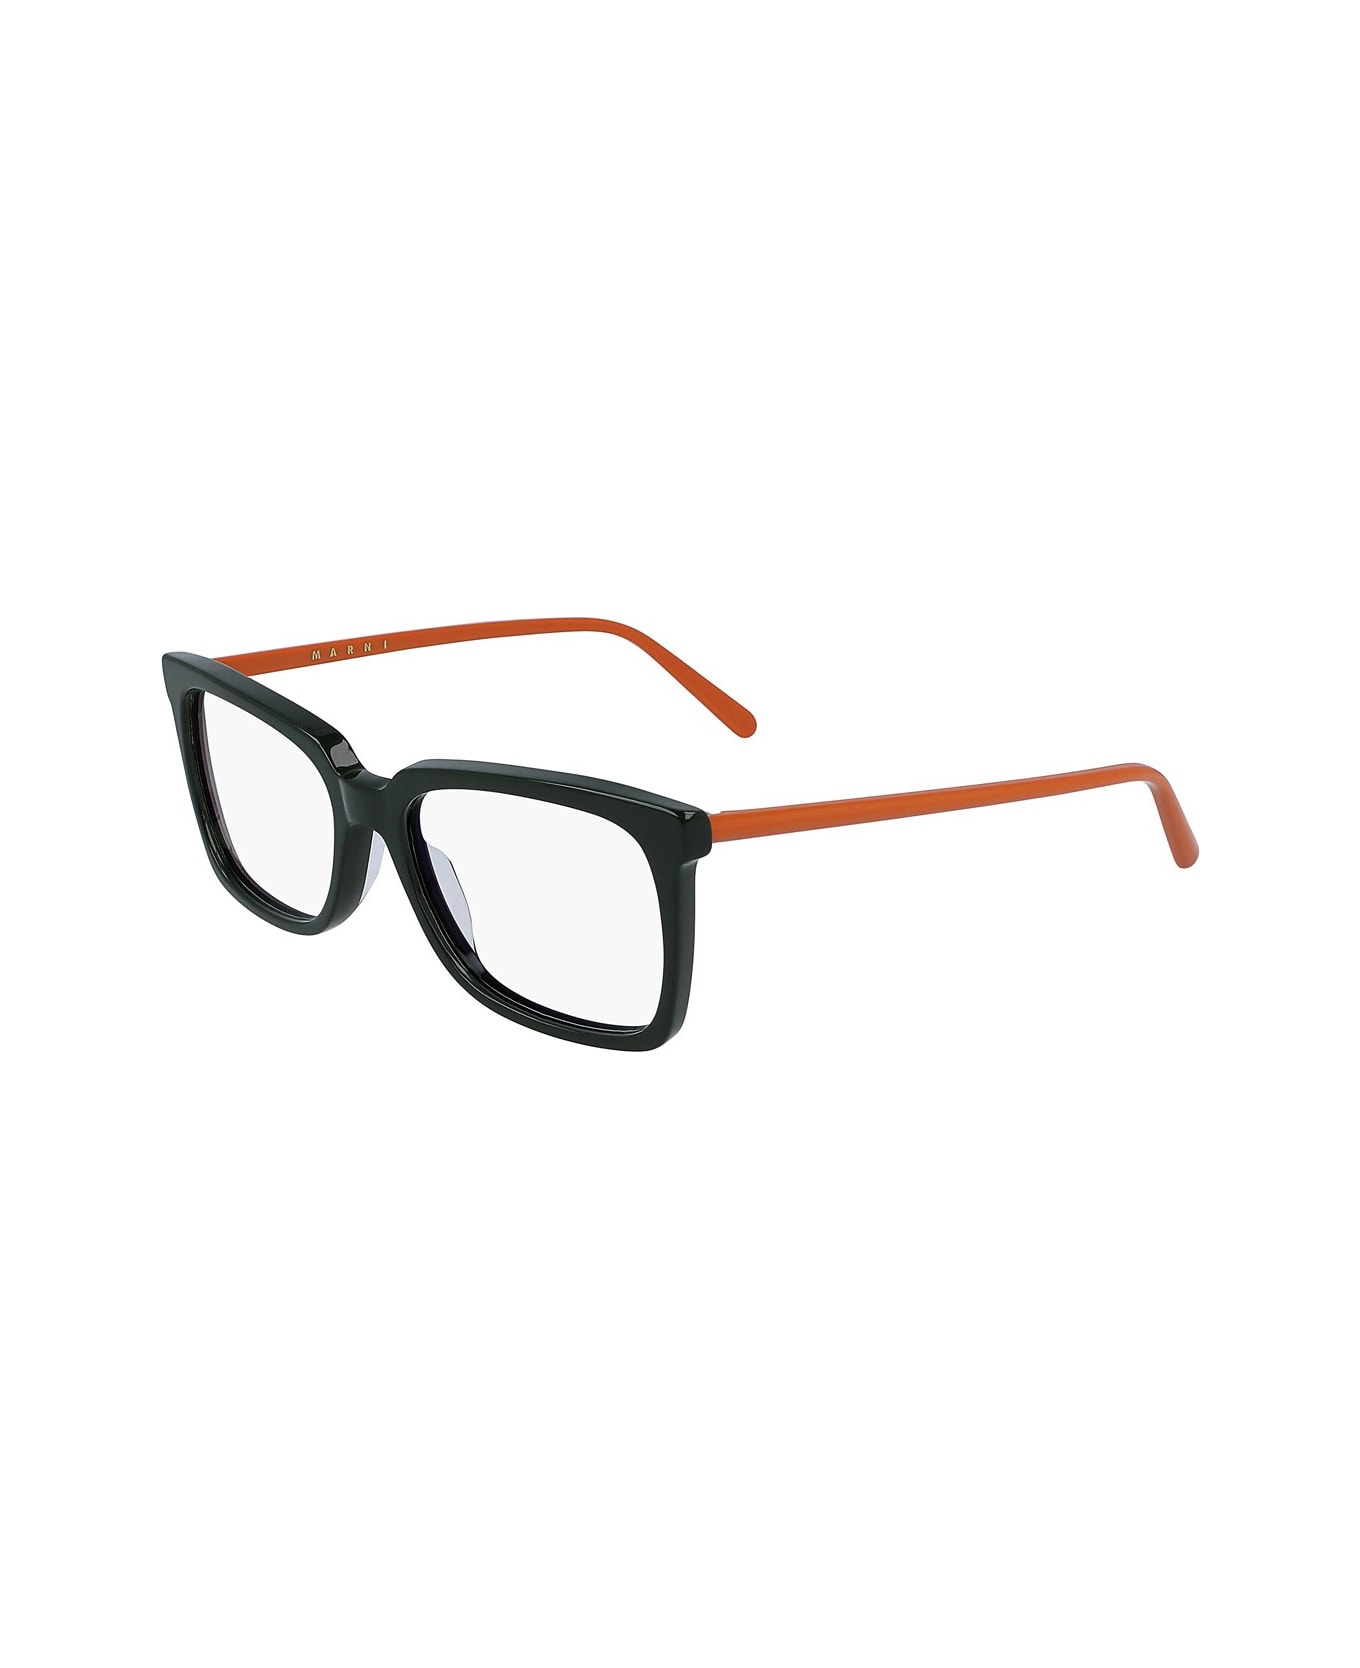 Marni Eyewear Me2630 Glasses - Verde